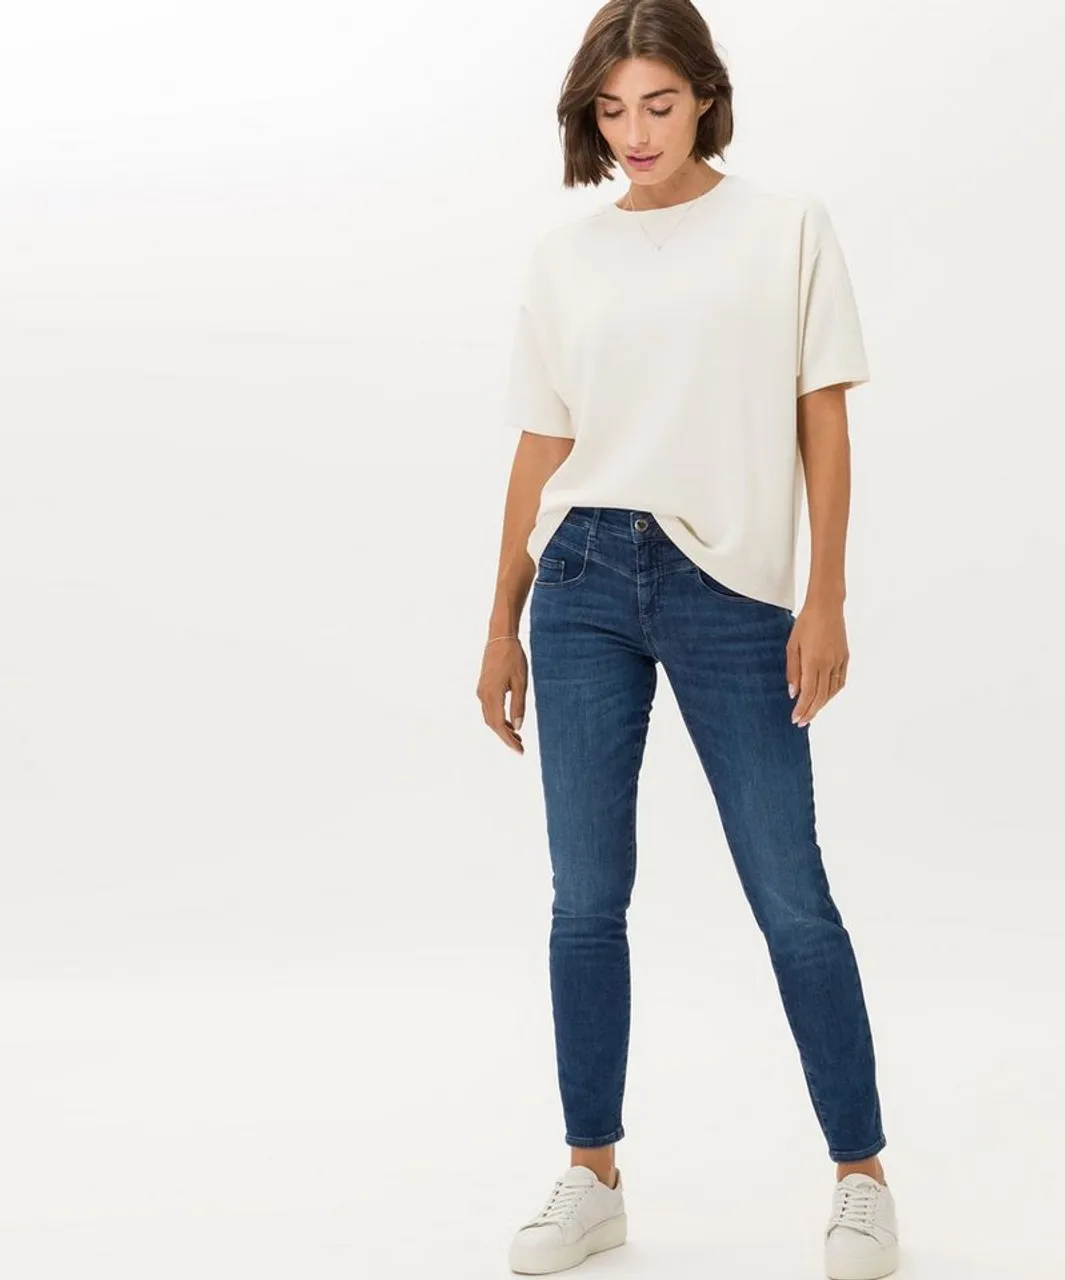 Brax Skinny-fit-Jeans STYLE.ANA